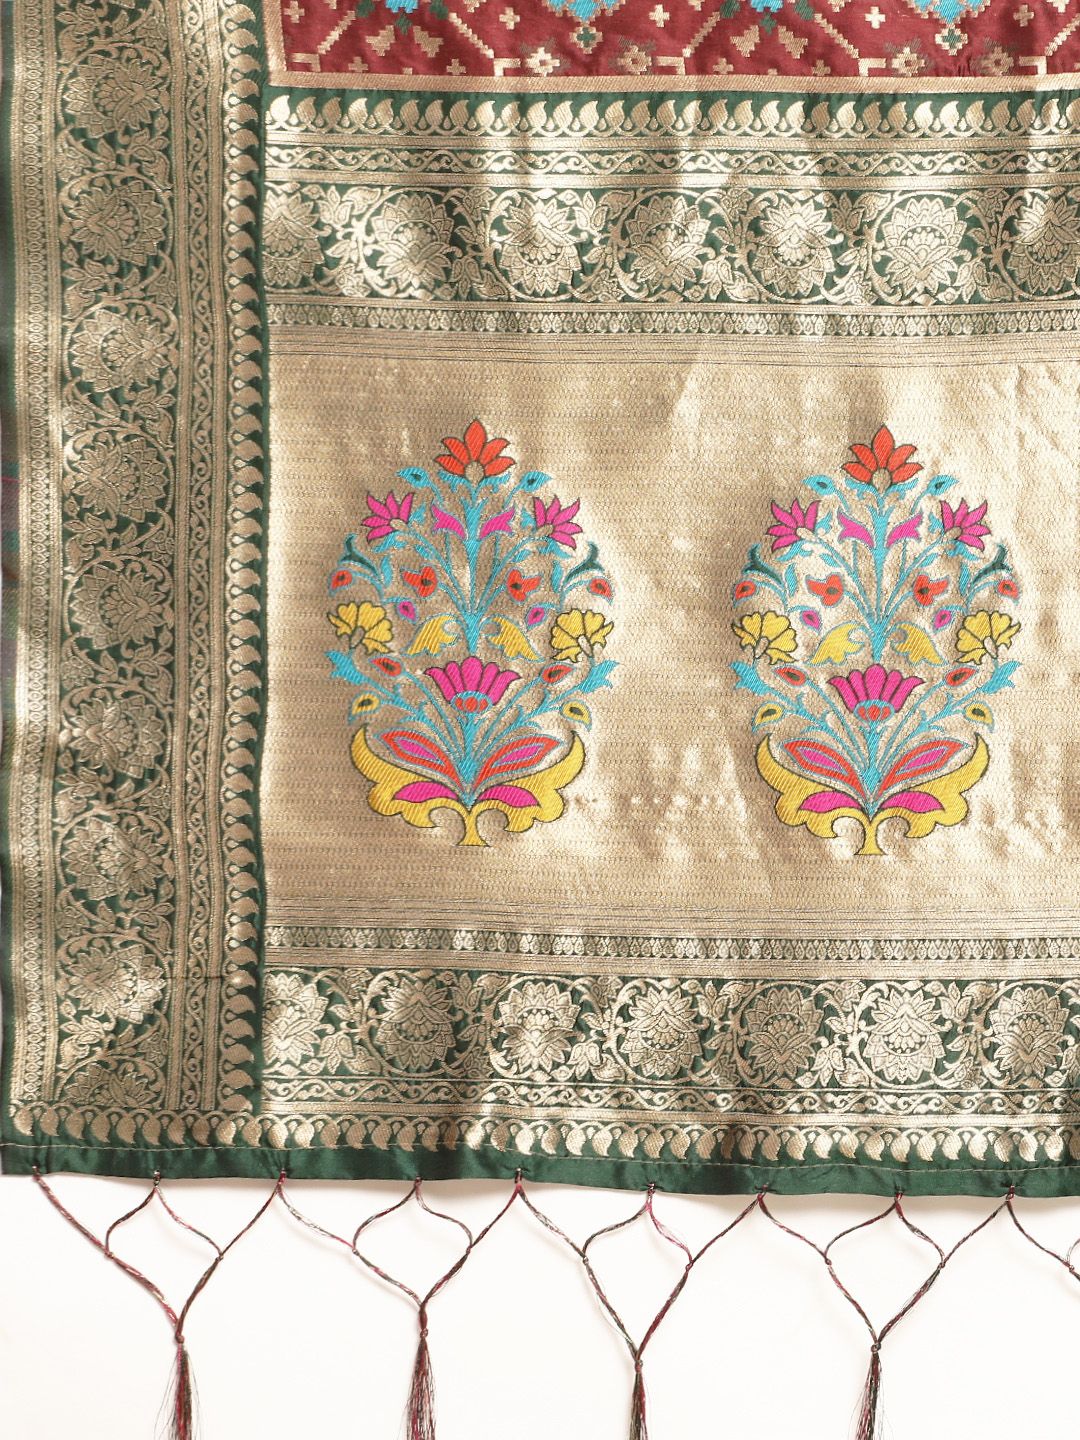 Maroon color banarasi weaving patola saree with brilliant look